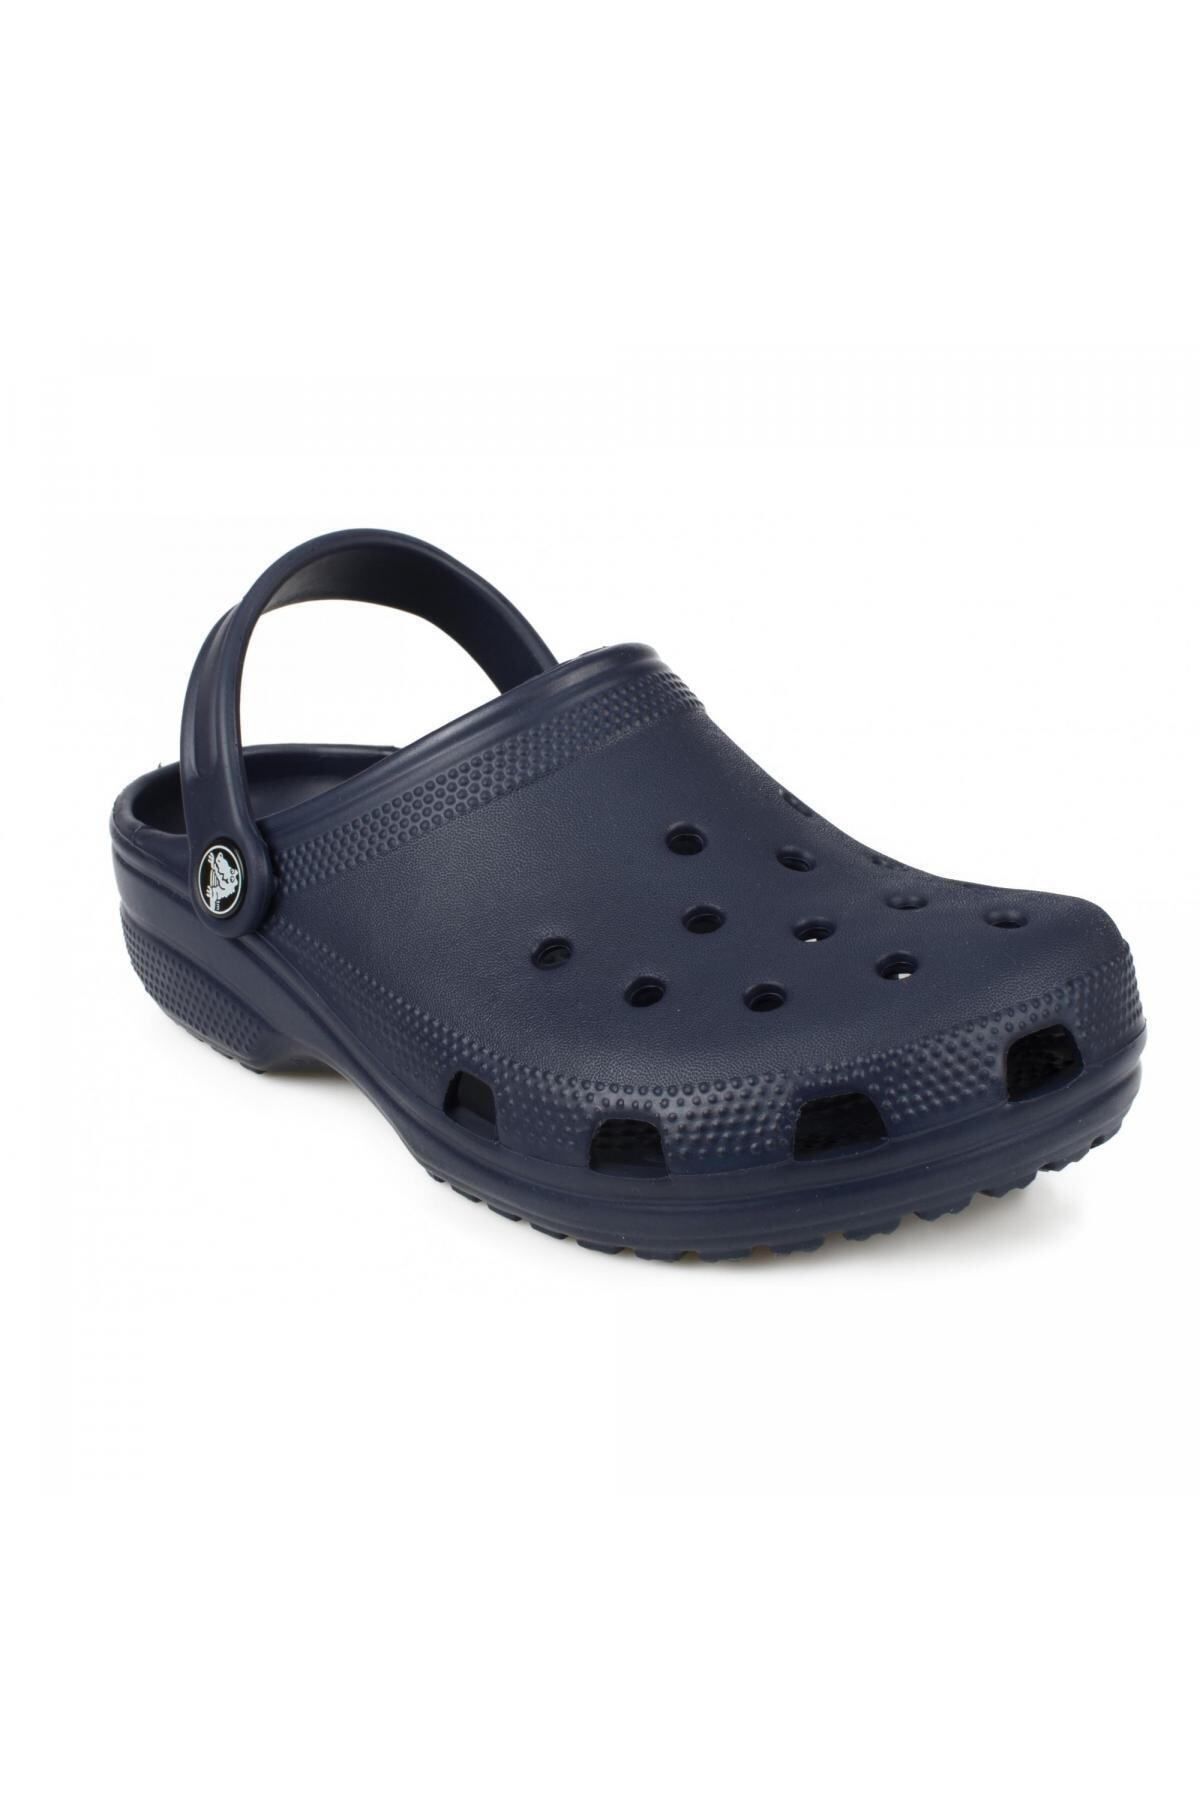 Crocs 206990 K Classic Clog T Navy Blue Children